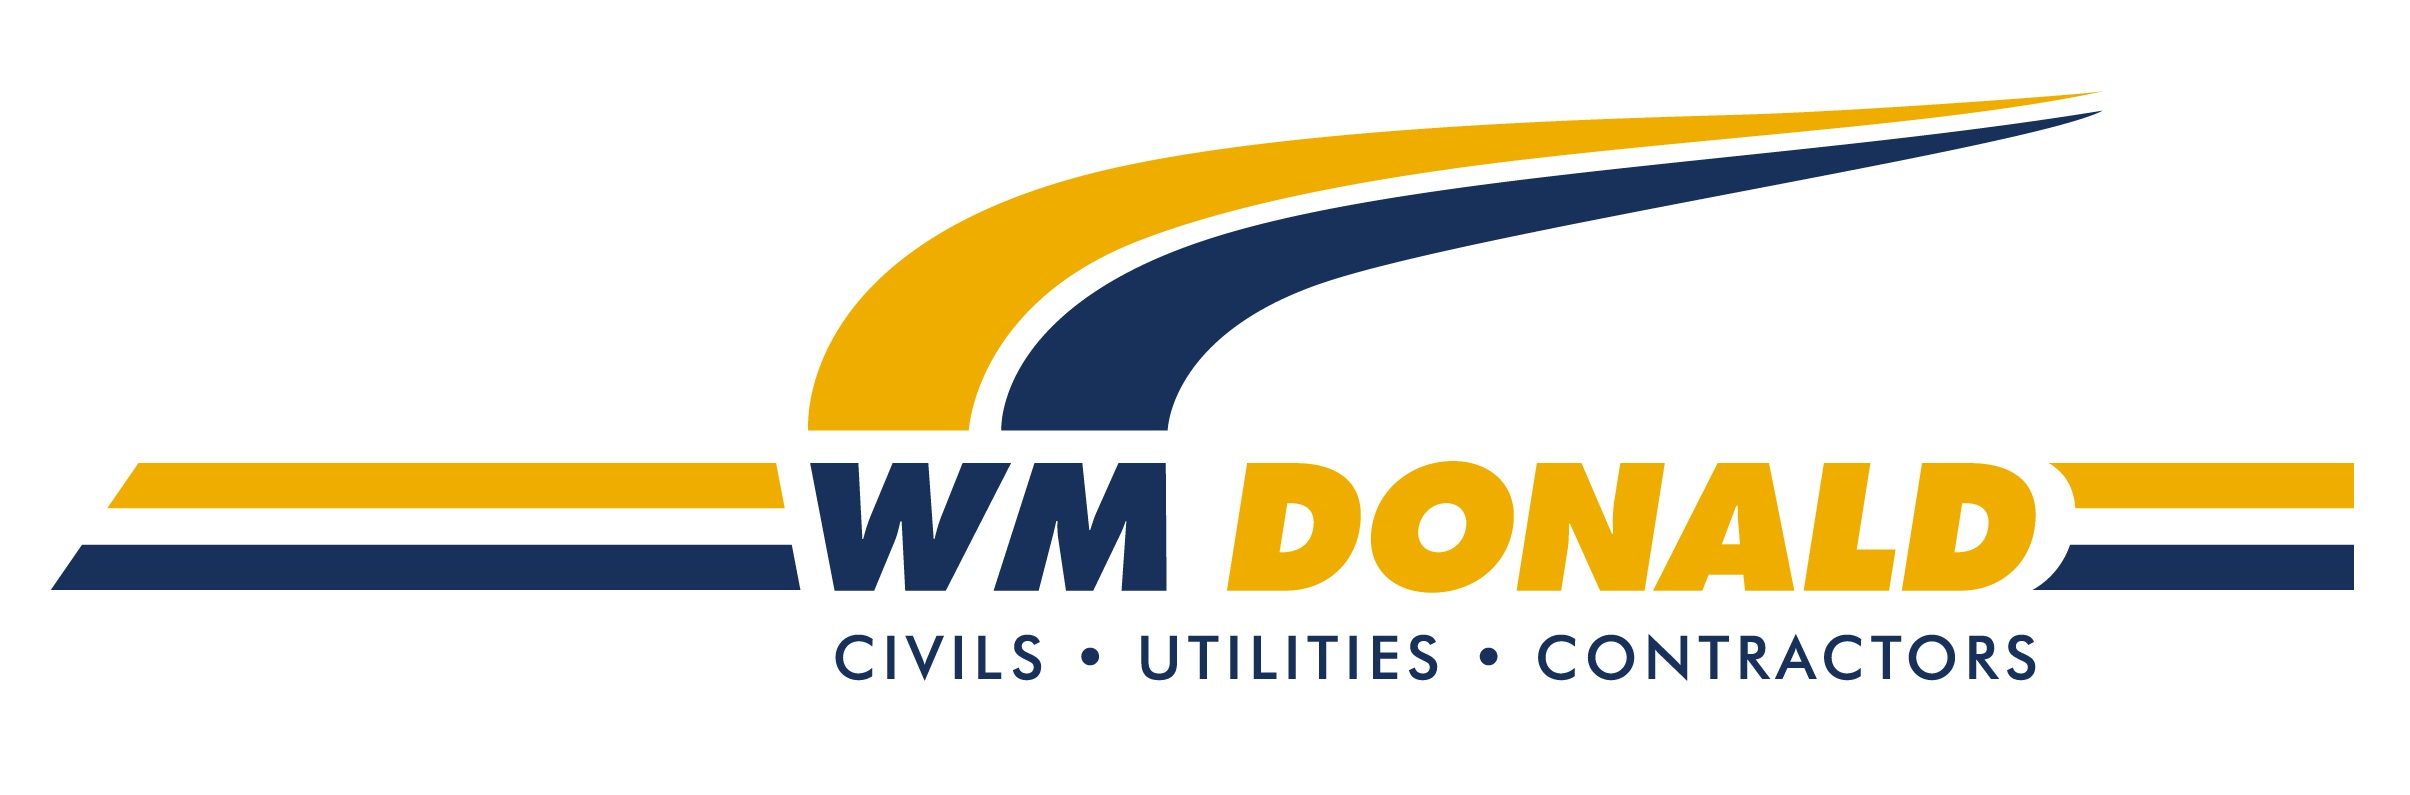 logo for WM Donald Civil Engineering Contractors